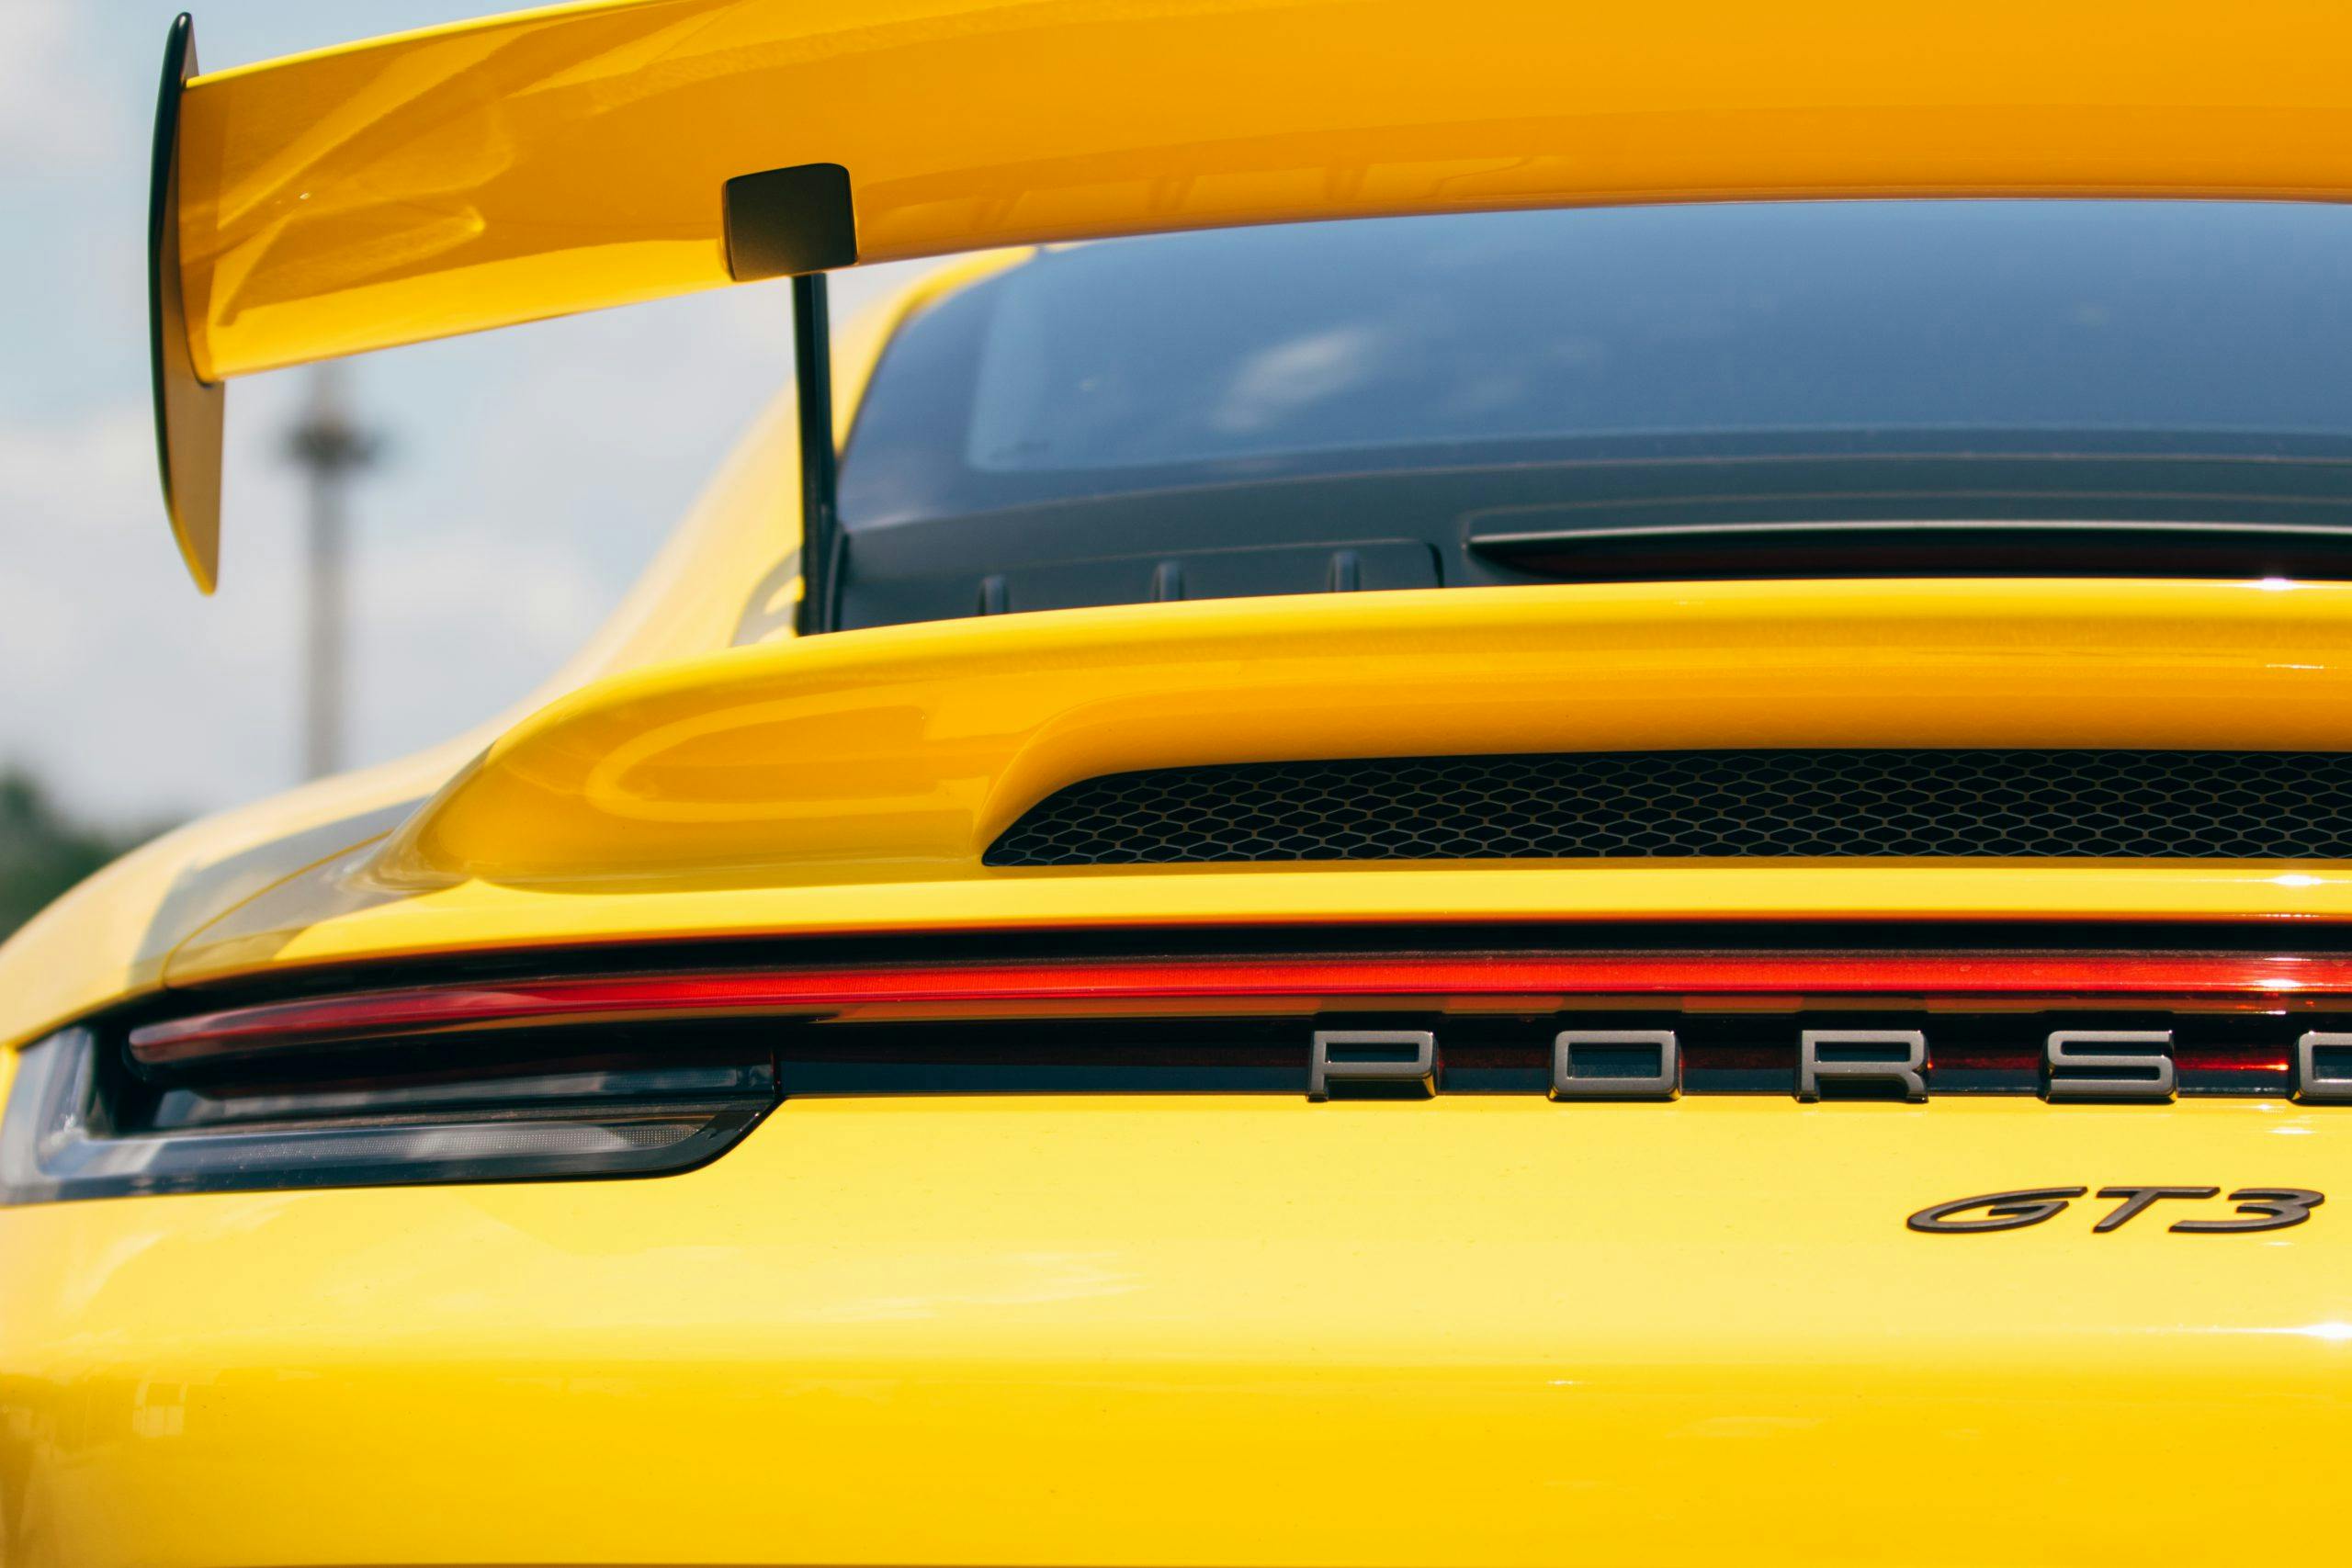 Porsche GT3 rear closeup